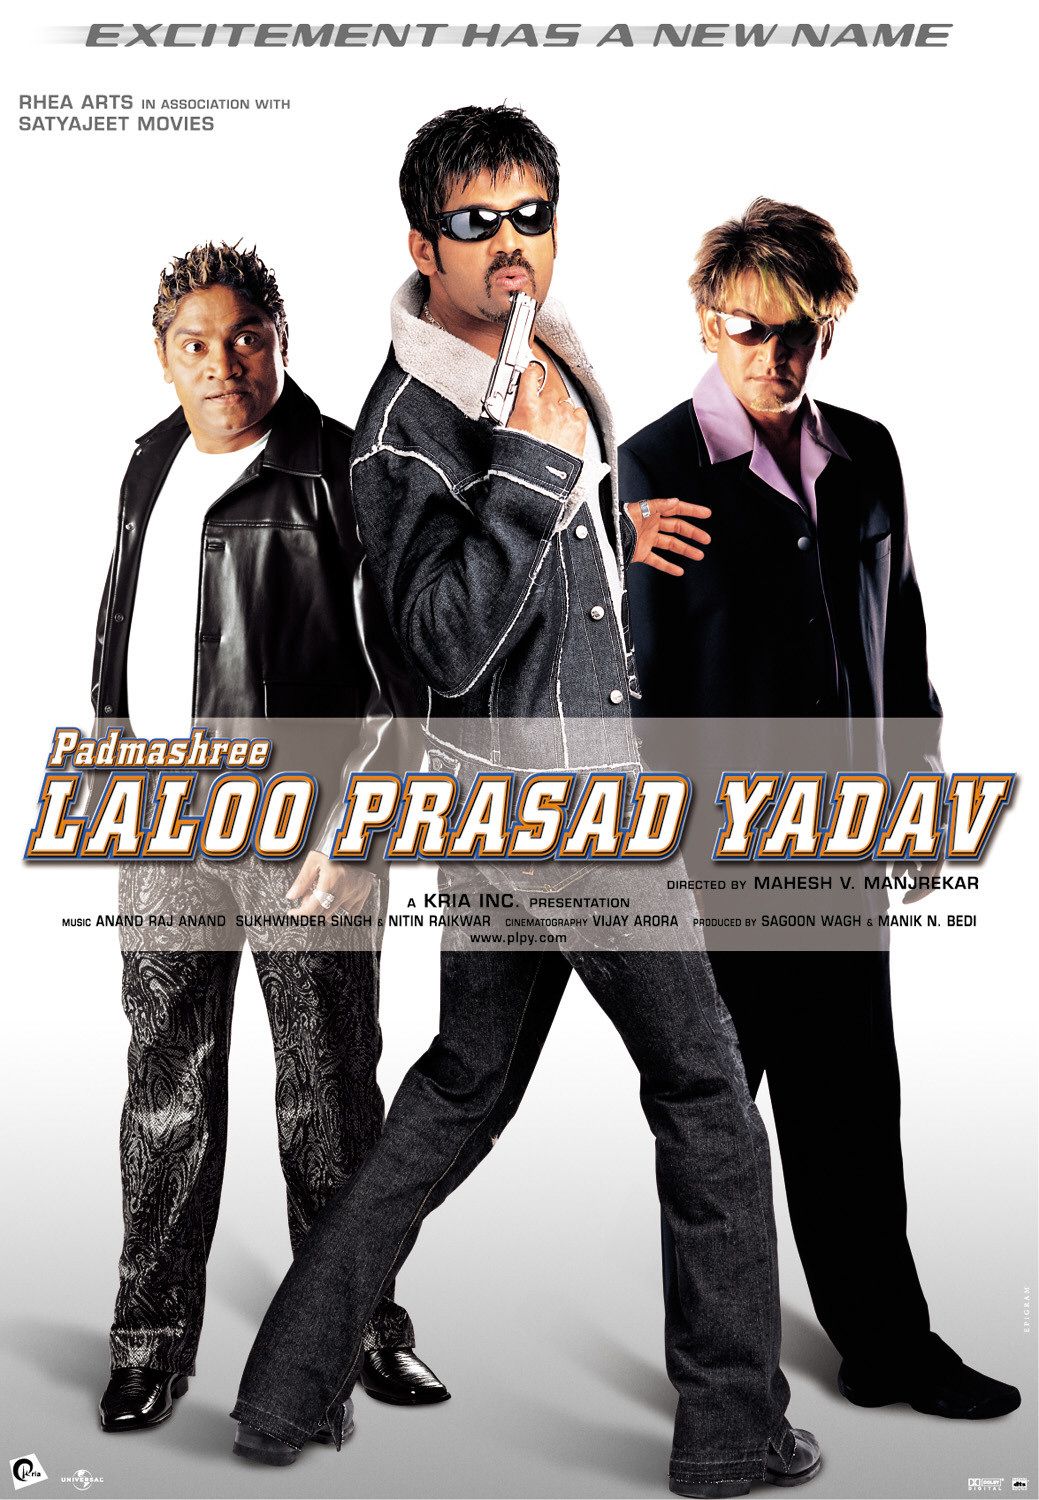 Extra Large Movie Poster Image for Padmashree Laloo Prasad Yadav (#1 of 6)